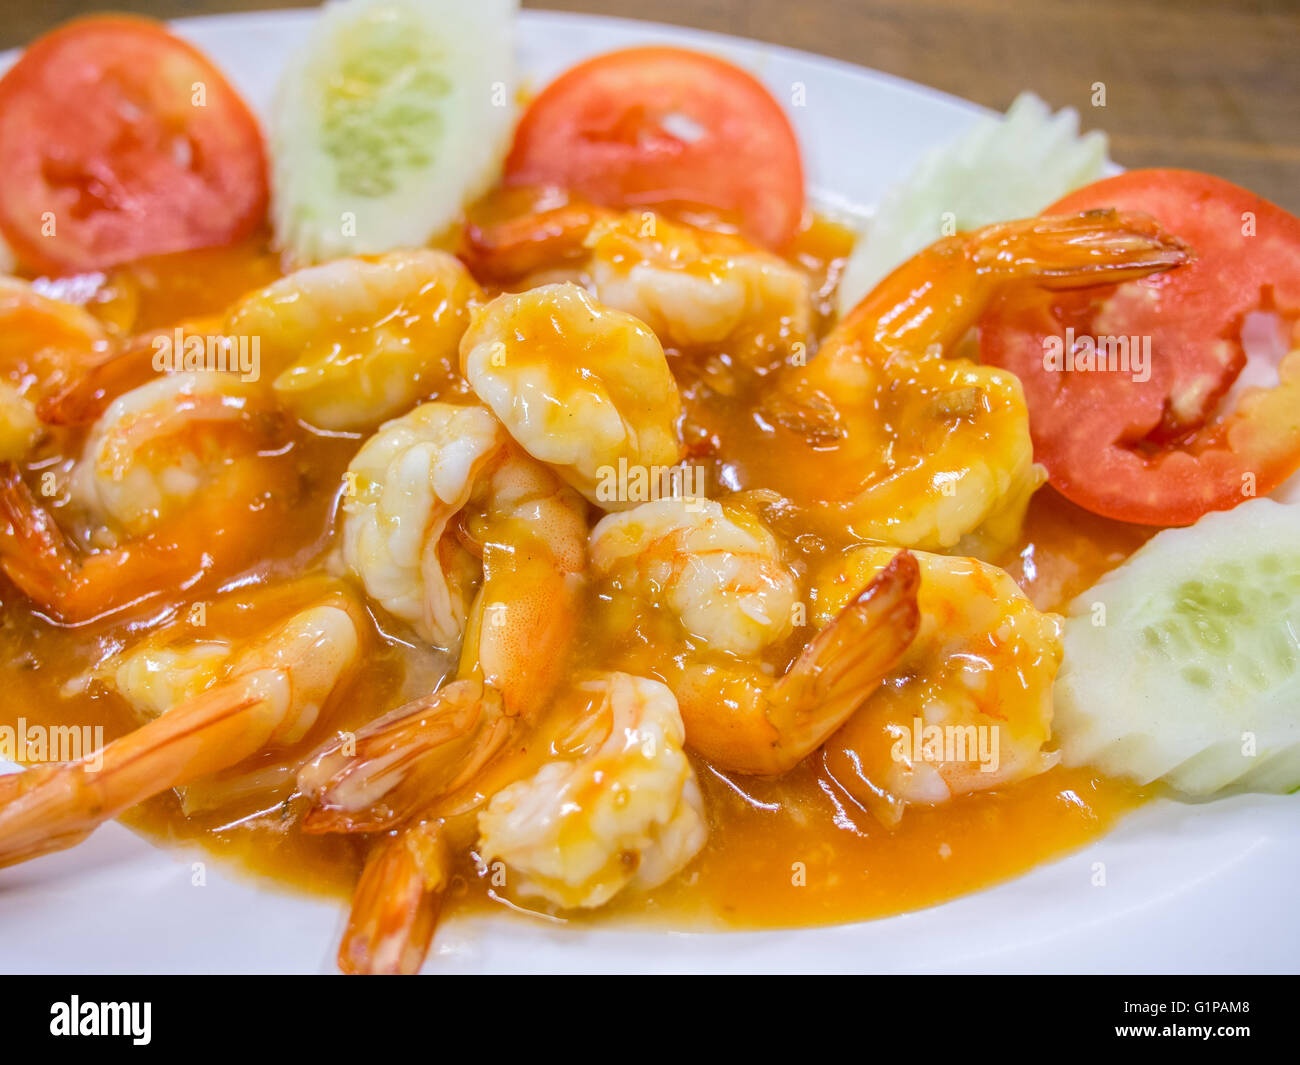 shrimp fried with sweet sauce Stock Photo